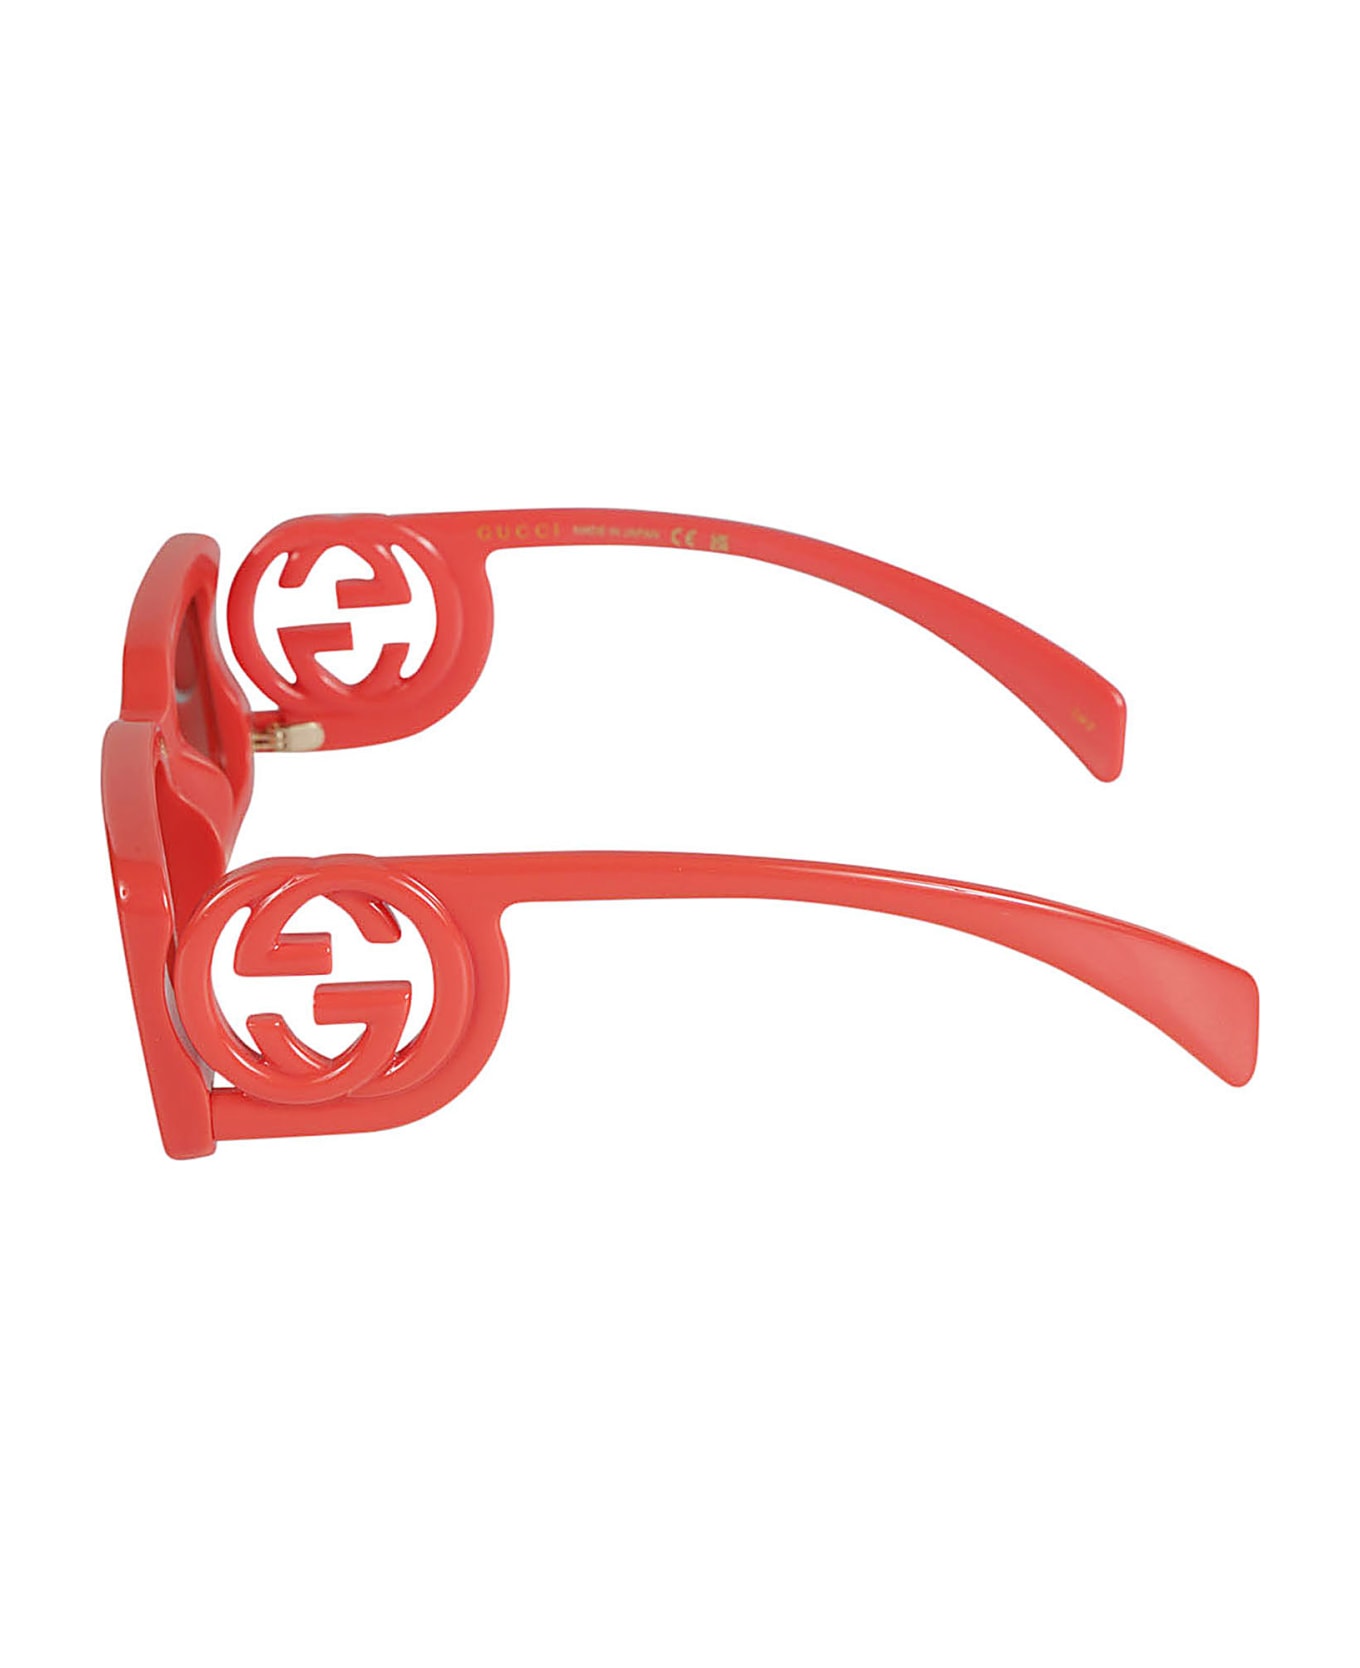 Gucci Eyewear Rectangle Logo Sunglasses - Red/Brown